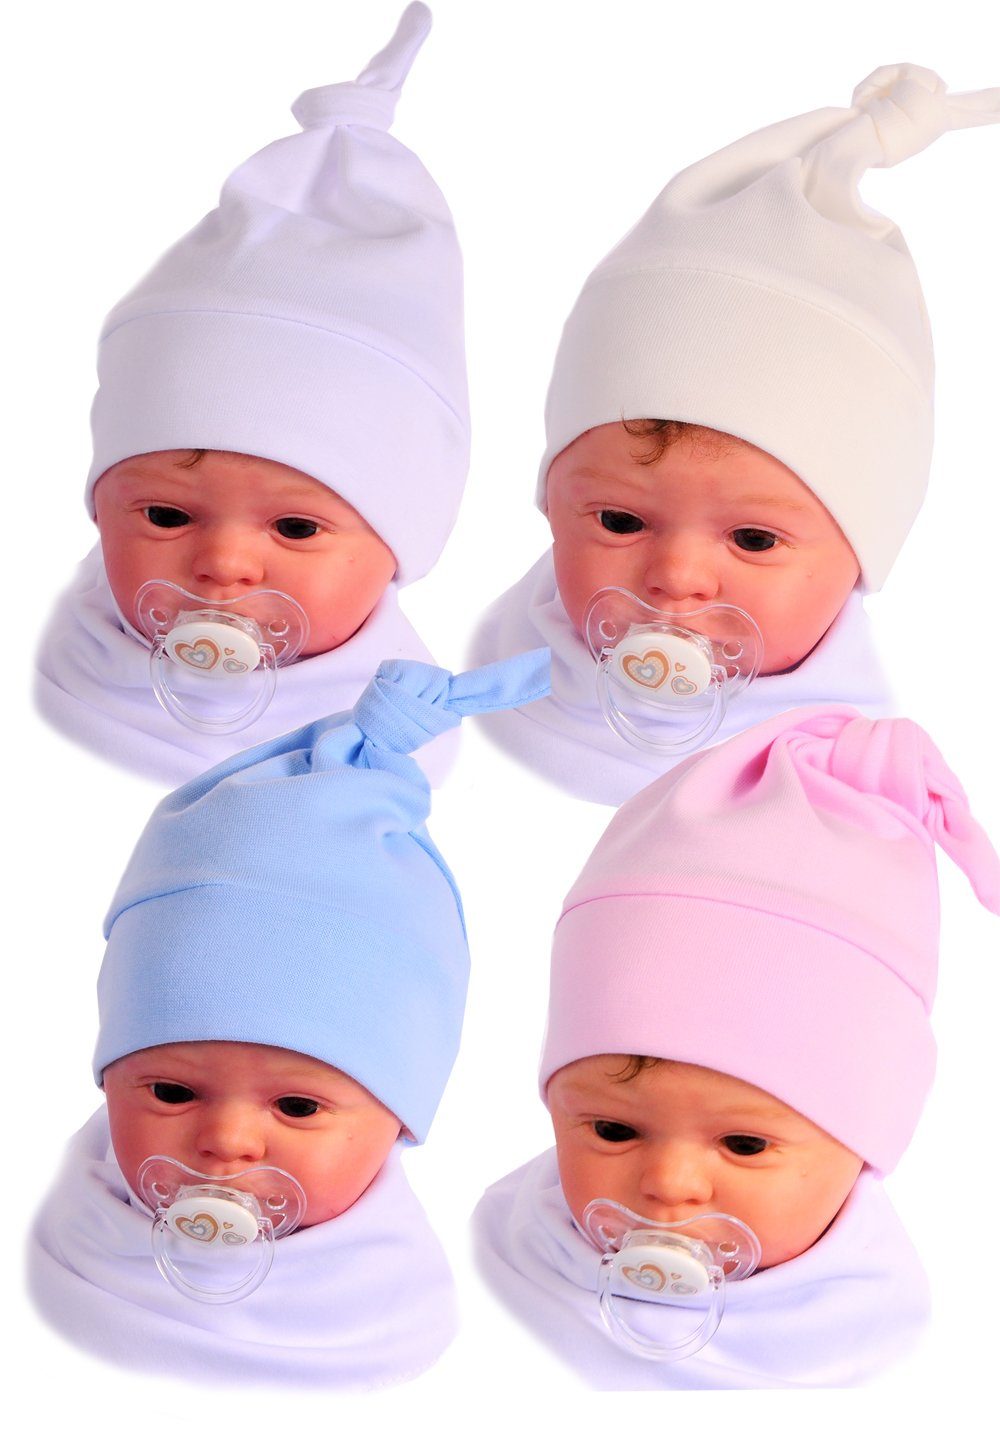 La Bortini Erstlingsmütze Baby Mütze Baby Mützchen Knotenmütze für Neugeborene Rosa